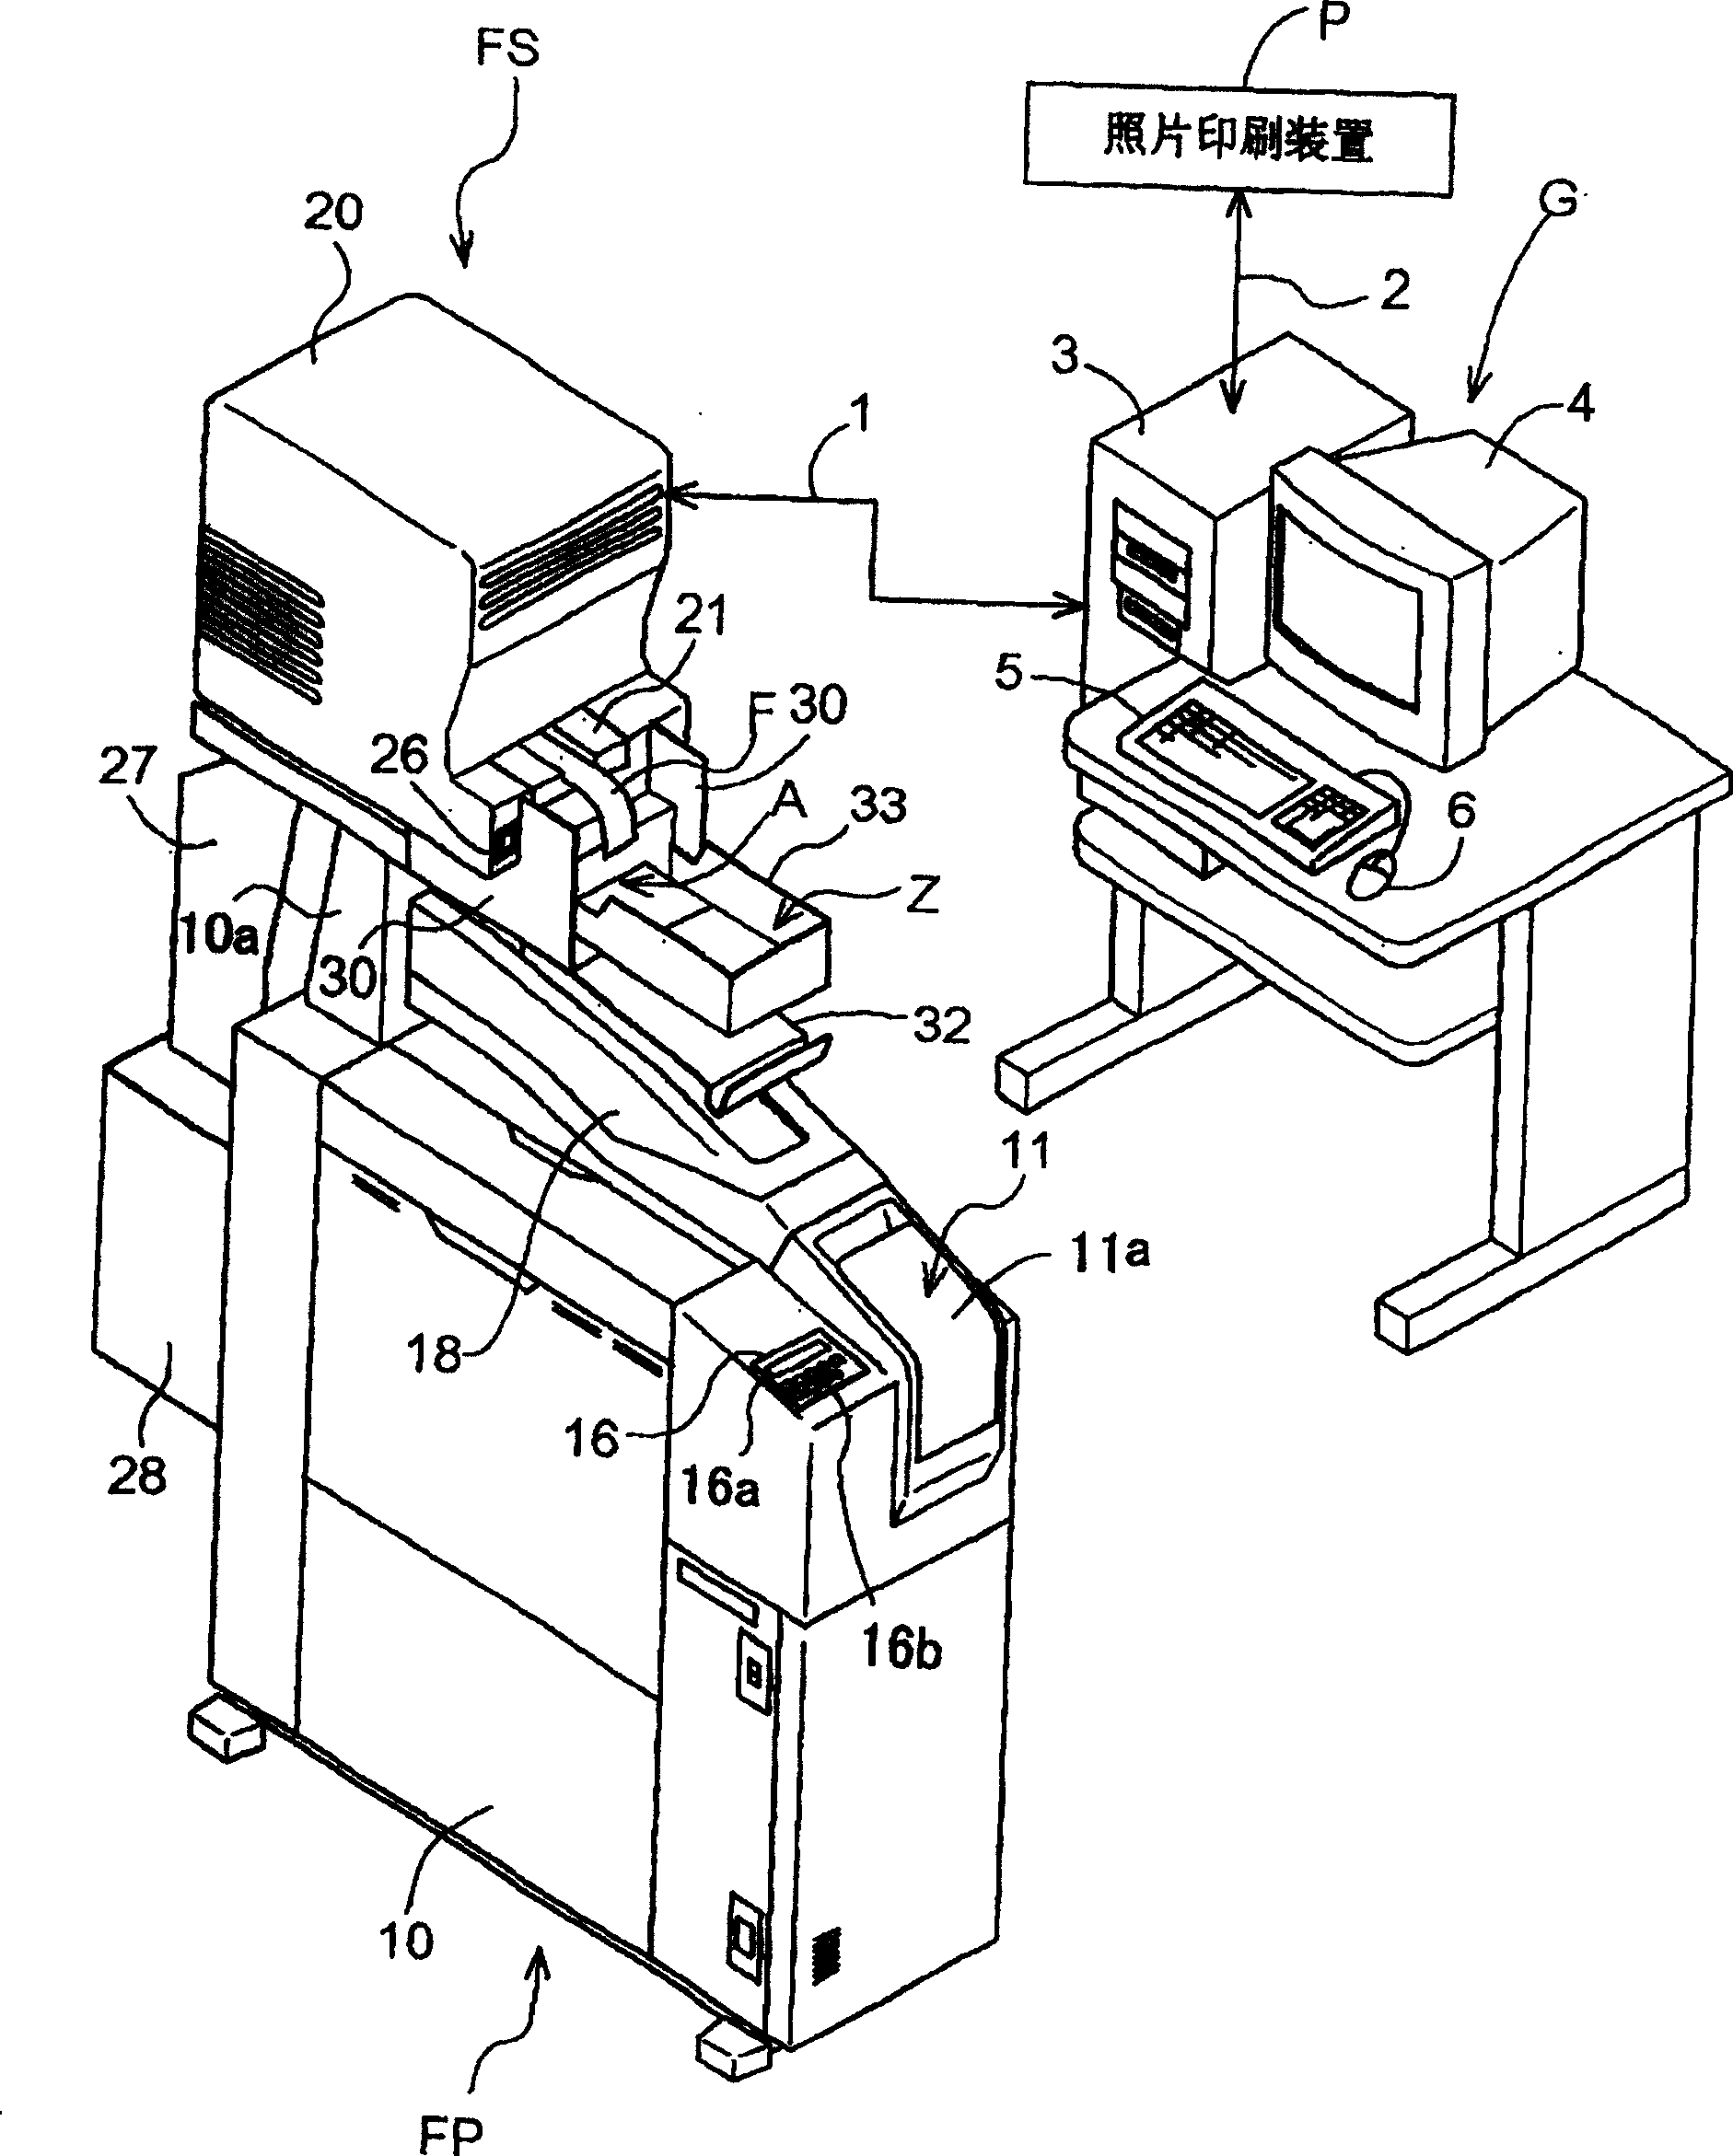 Film treatment device